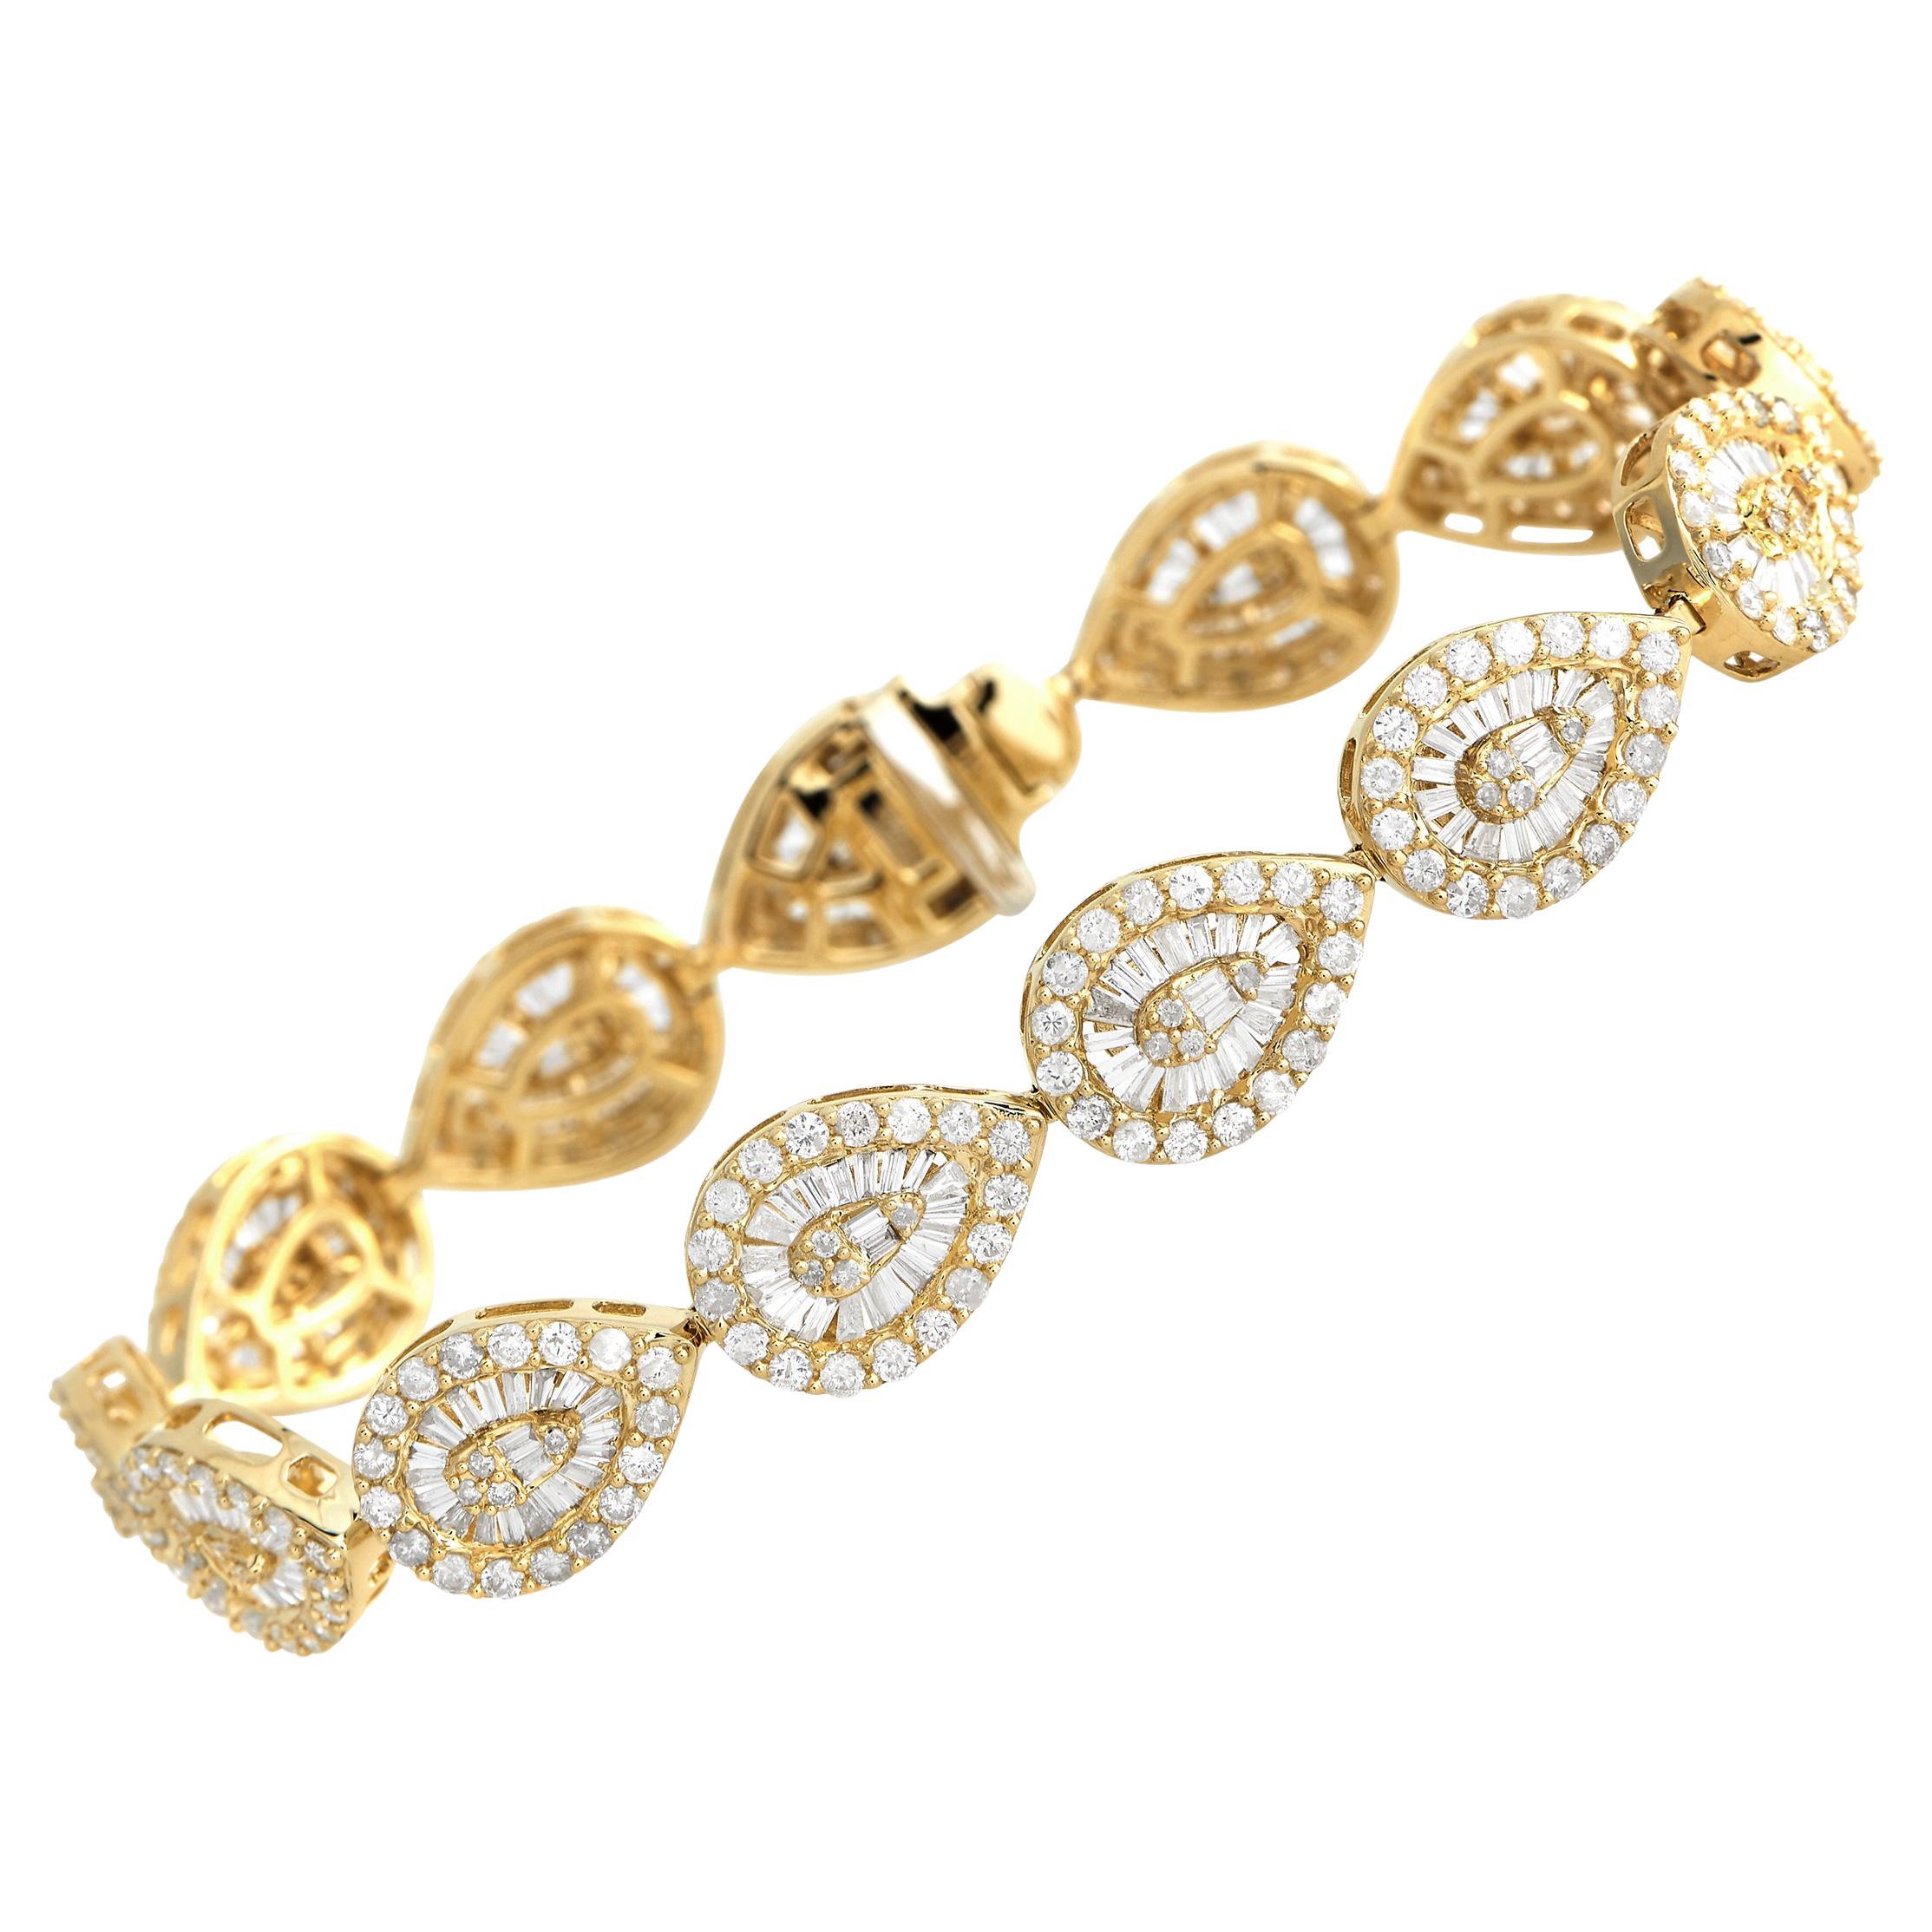 LB Exclusive 14K Yellow Gold 6.05ct Diamond Bracelet For Sale